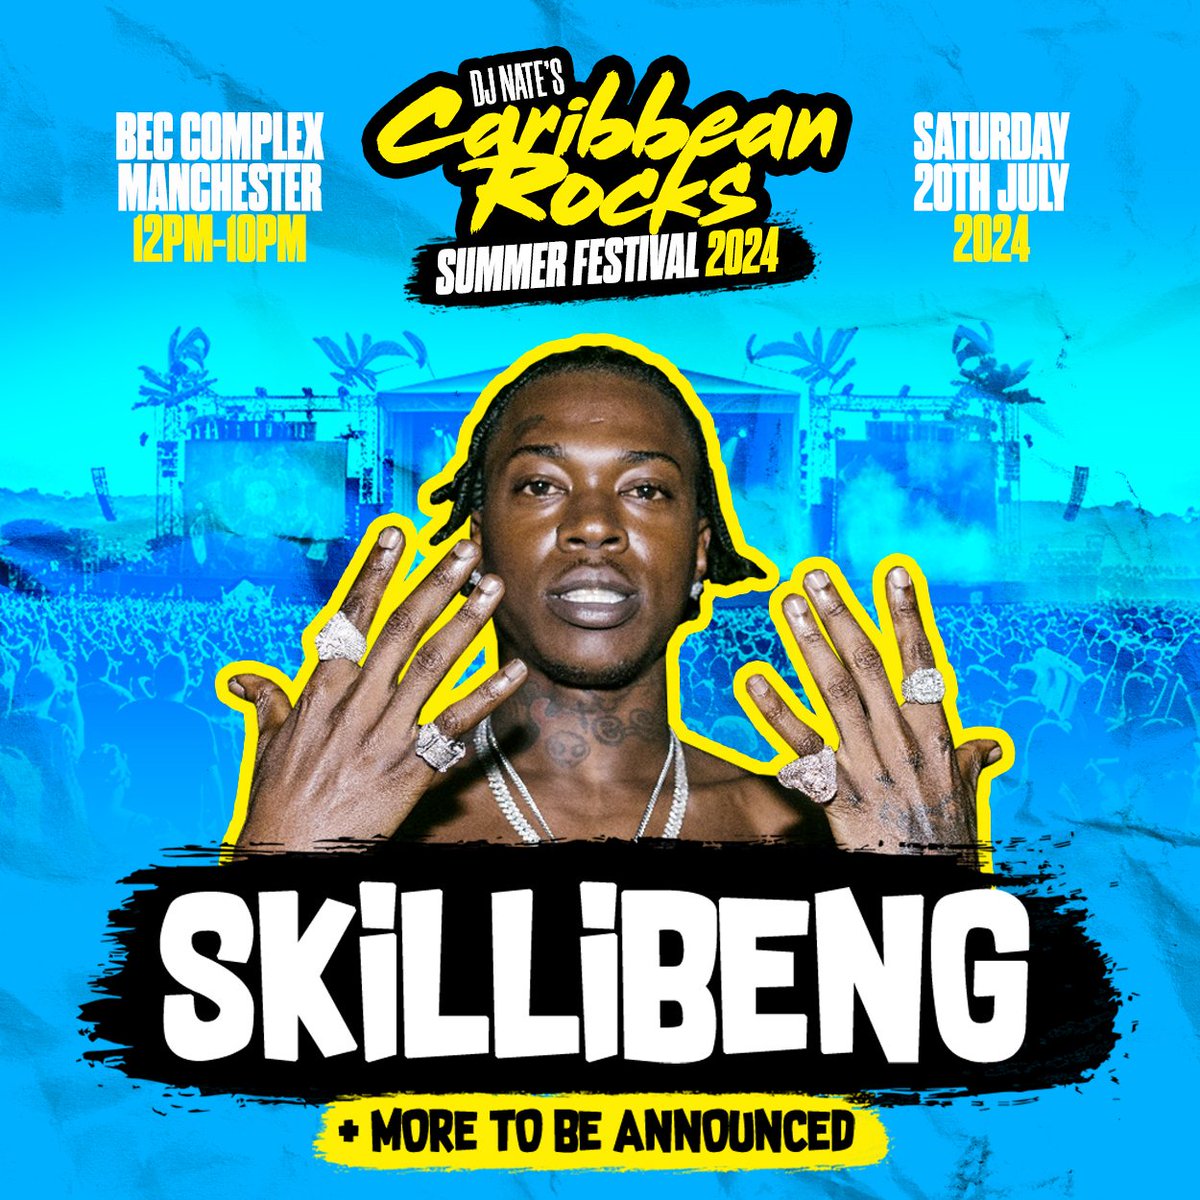 ‼️@skillibeng at the @caribbean_rocks music fest LET'S GOOOOOOO 🎟️£33.00 & up 👉shoobs.com/events/95504/c…